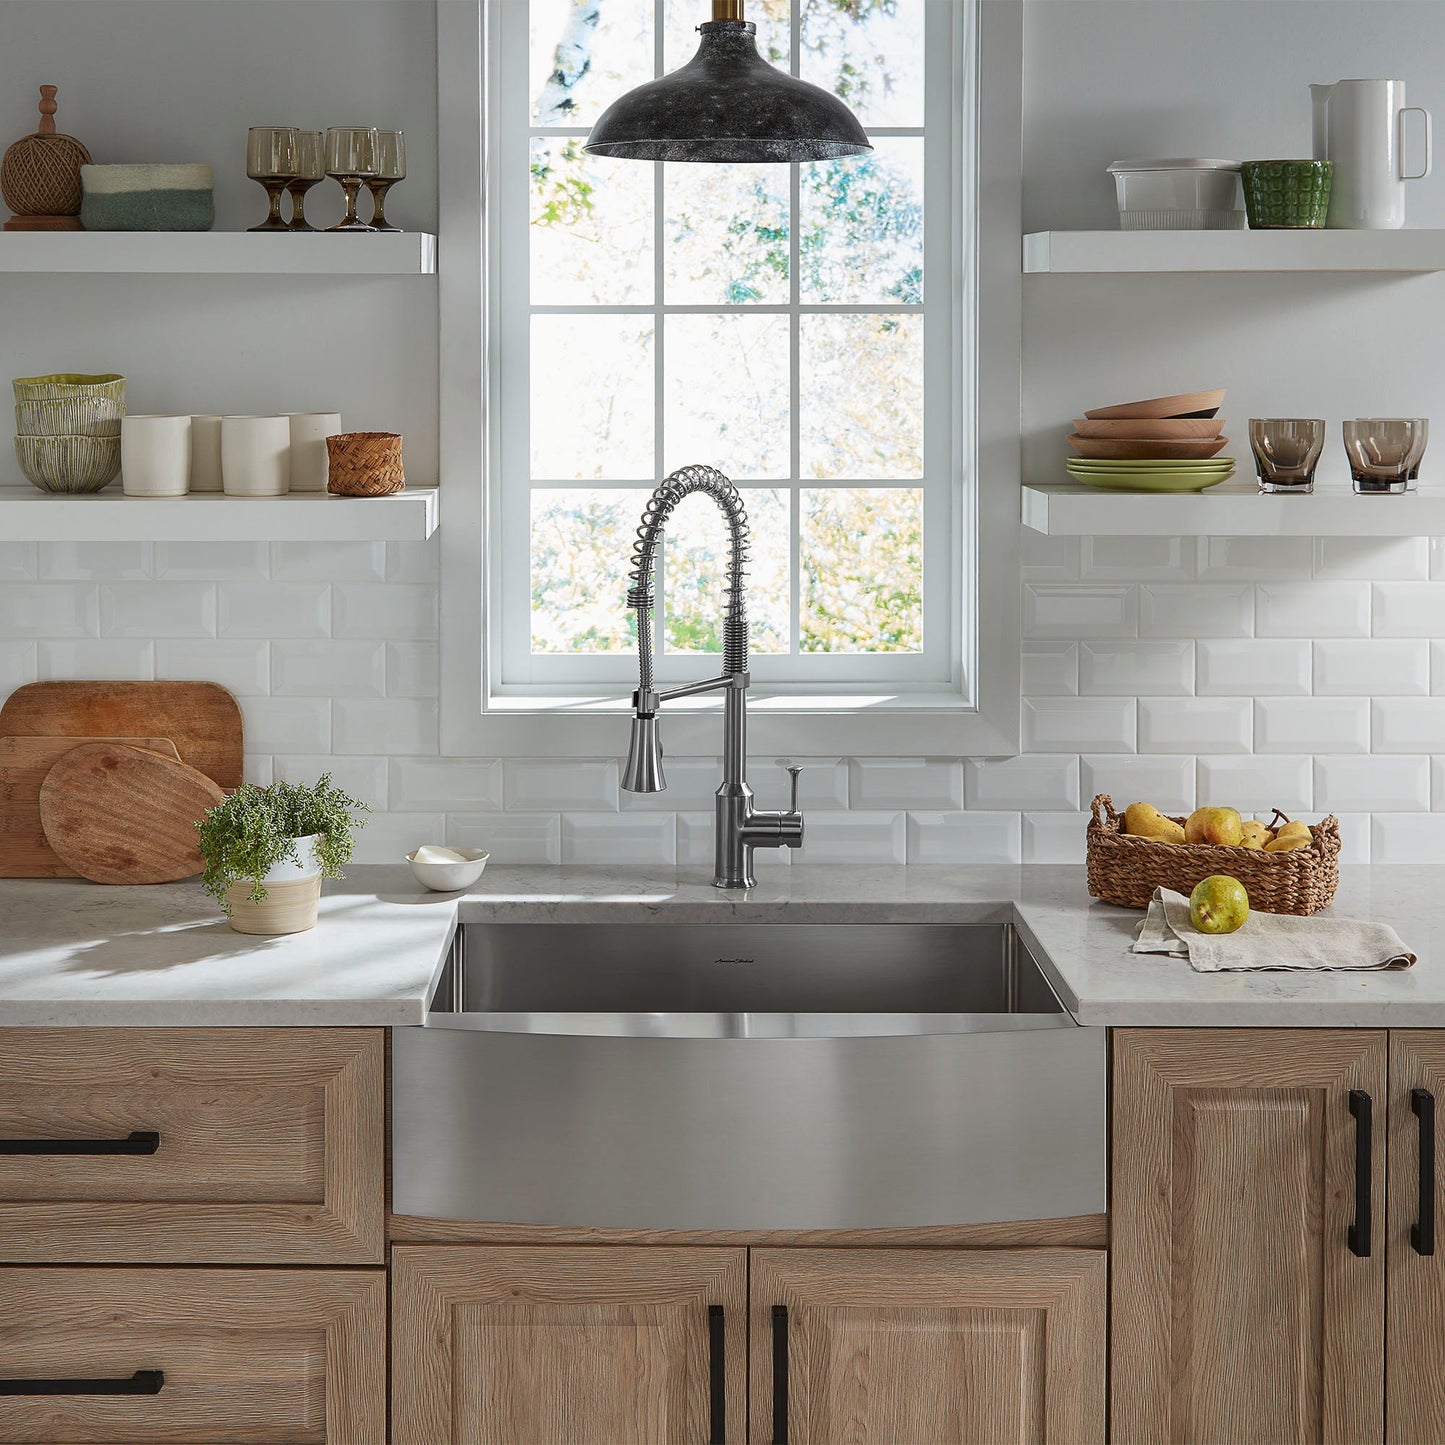 American Standard Pekoe® 33 x 22-Inch Stainless Steel Single-Bowl Farmhouse Apron Front Kitchen Sink - 18SB.9332200A